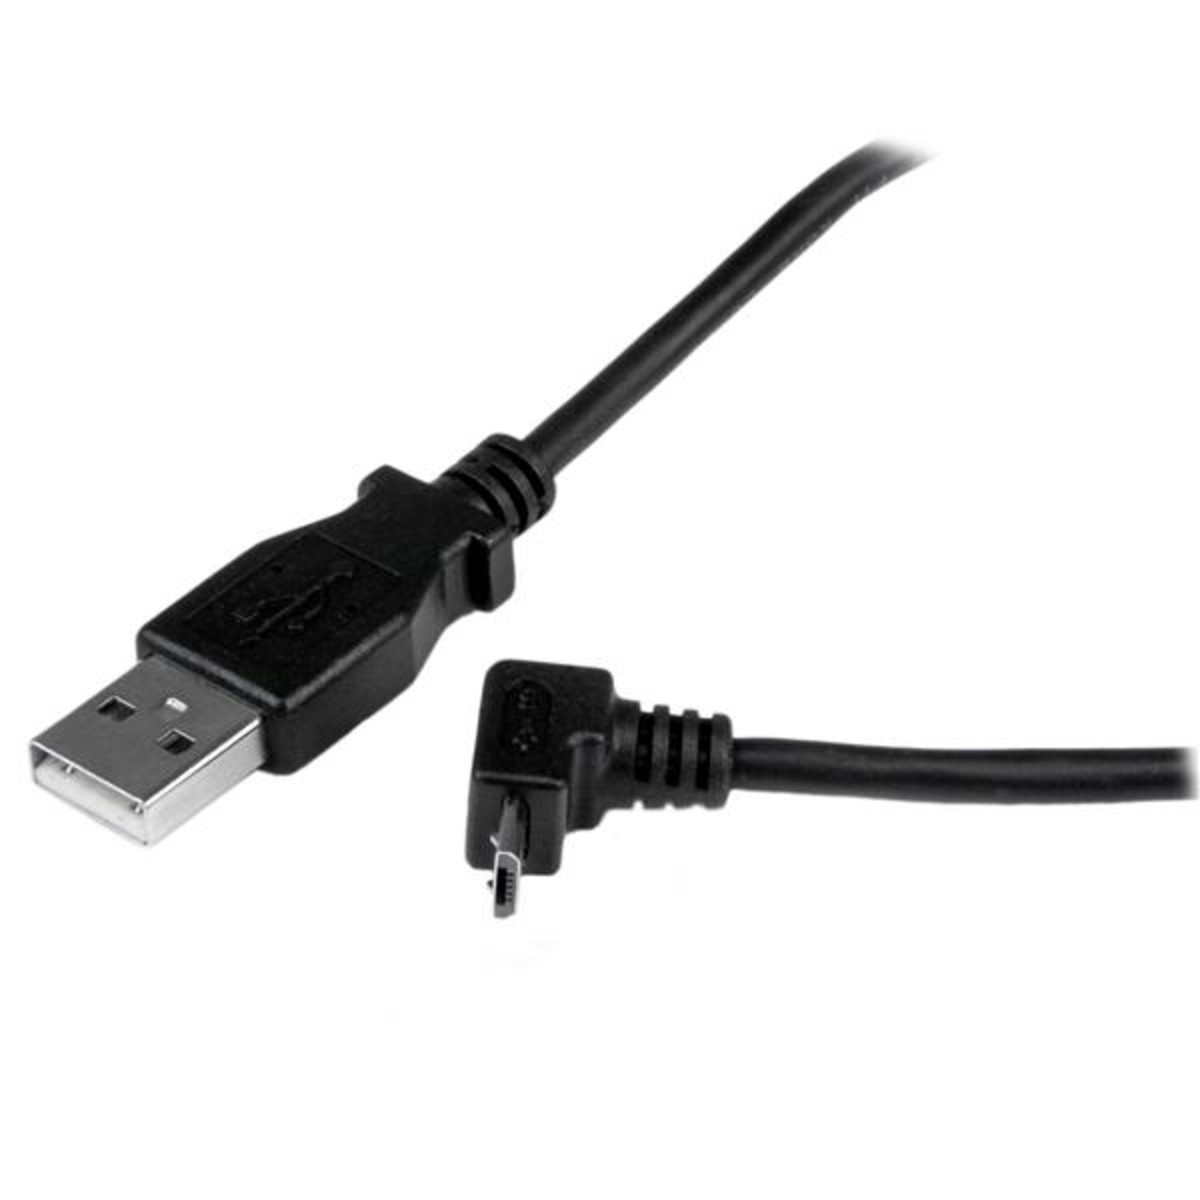 1m Micro USB Cable - A-Up Angle Micro B